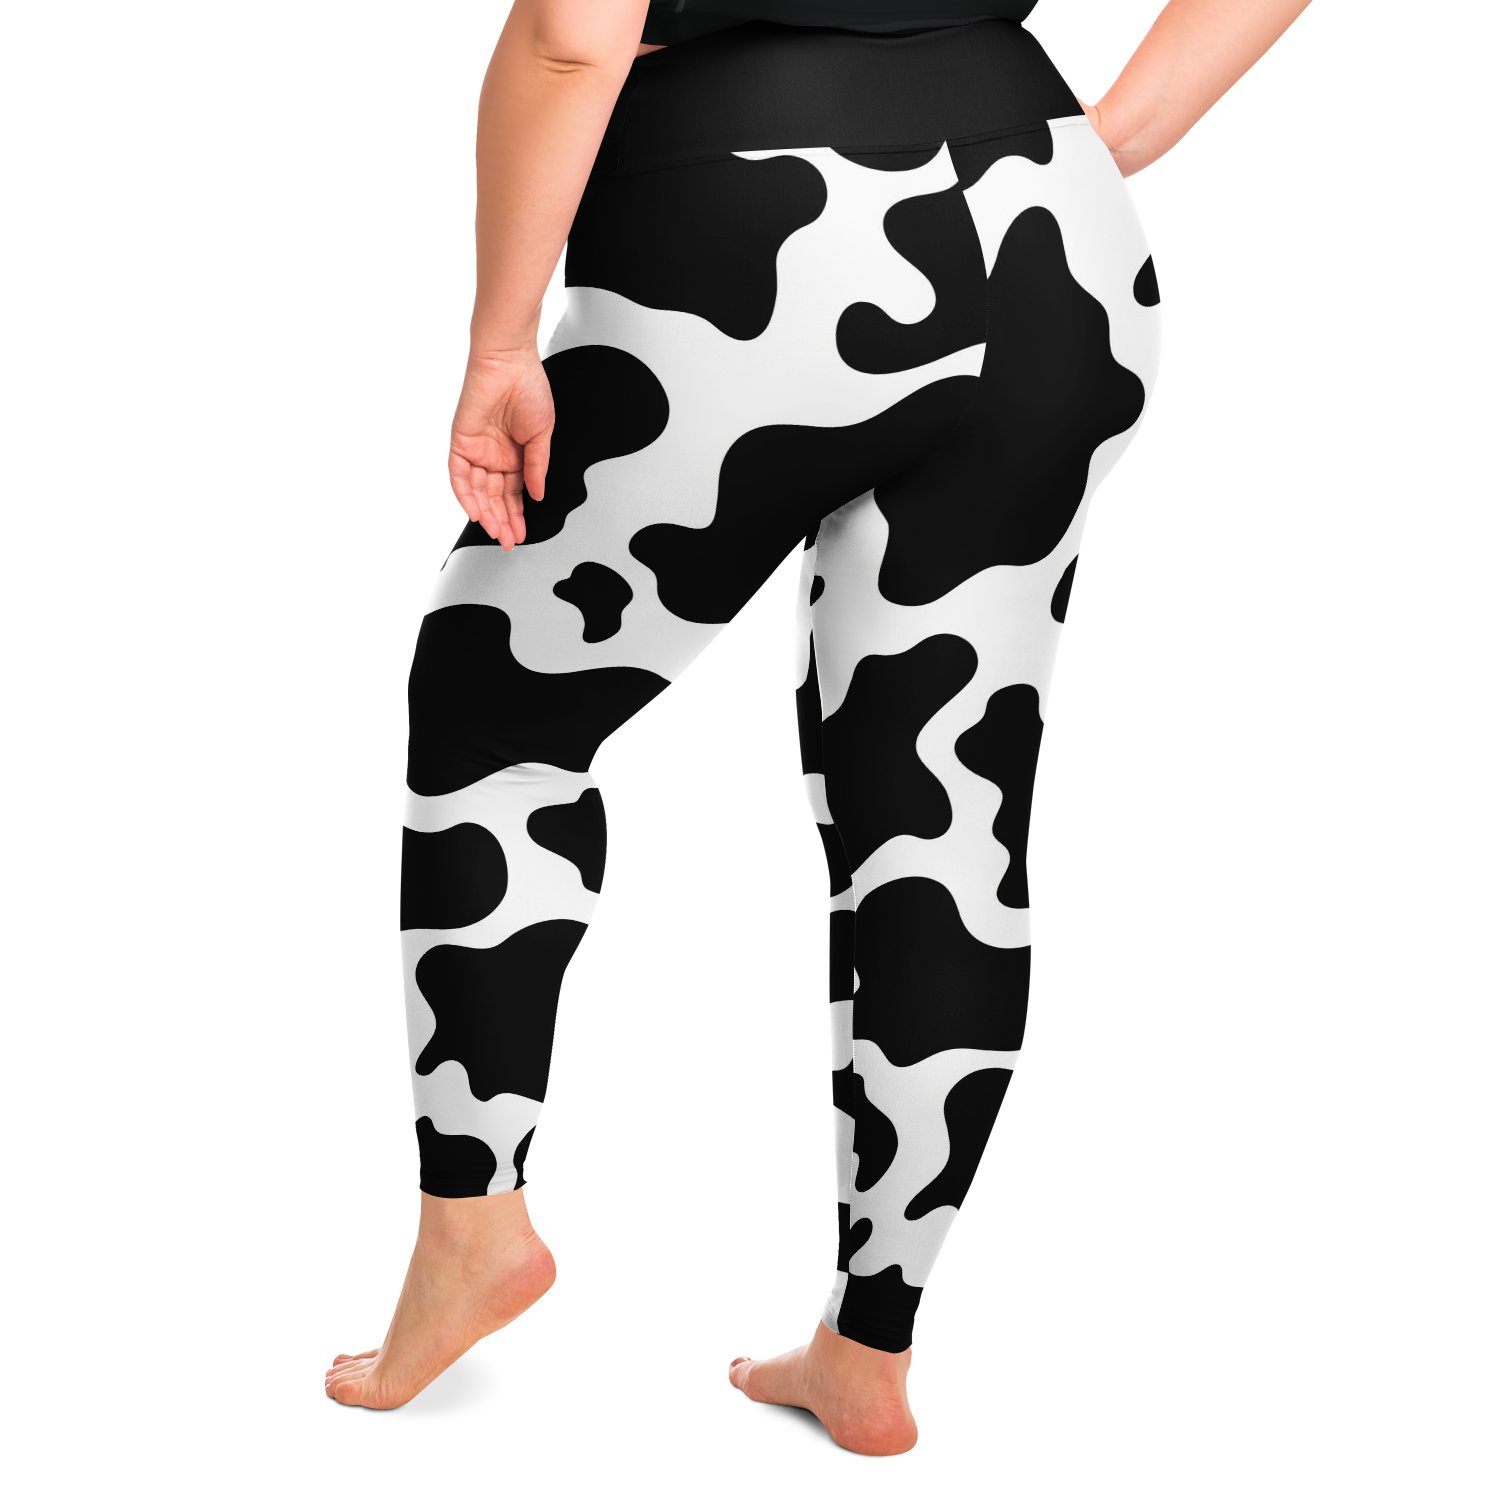 Cow Print Leggings - Plus Size Women's Cow Print Leggings Official